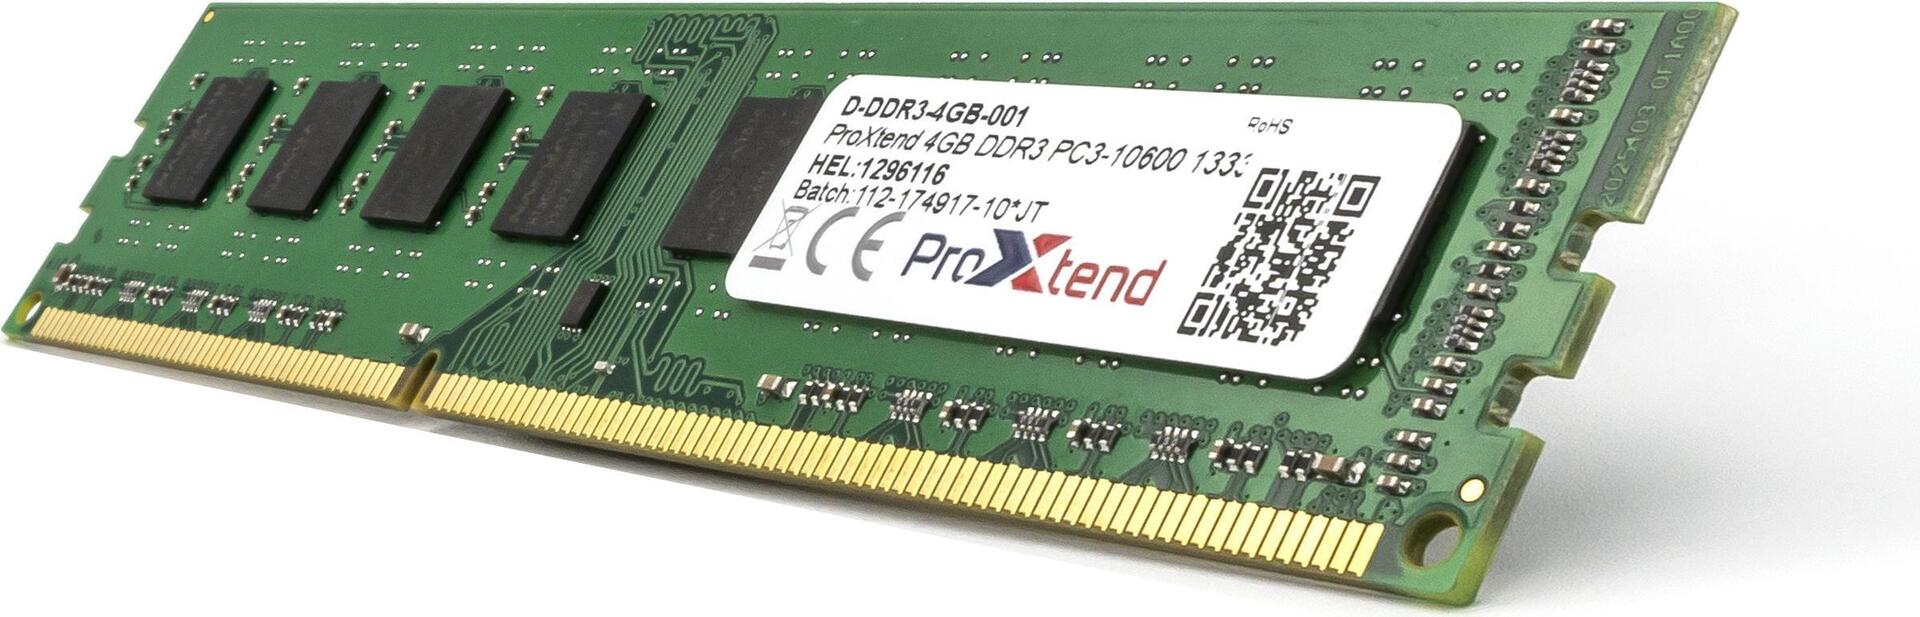 ProXtend D DDR3 4GB 001 Speichermodul 1333 MHz (D DDR3 4GB 001)  - Onlineshop JACOB Elektronik